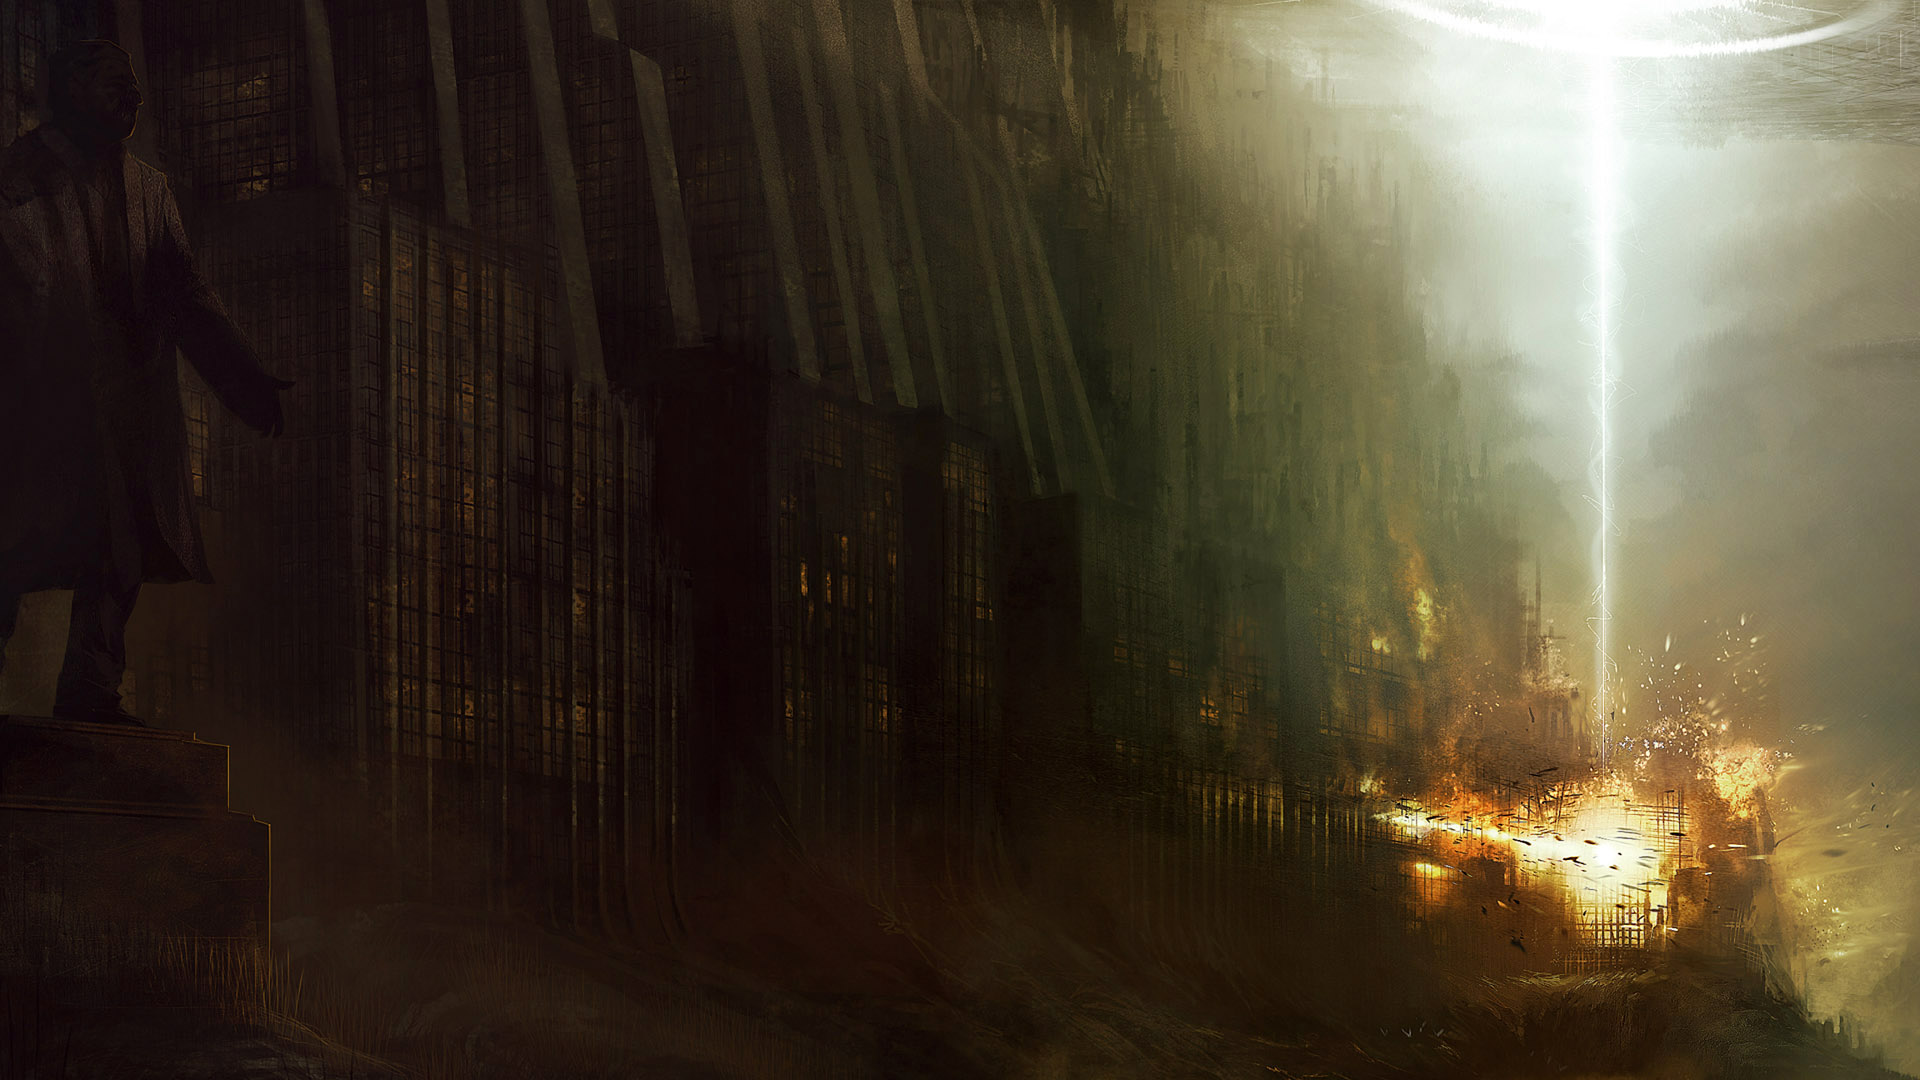 CGI desktop wallpaper showcasing a city landscape devastated by destruction, featuring a statue.